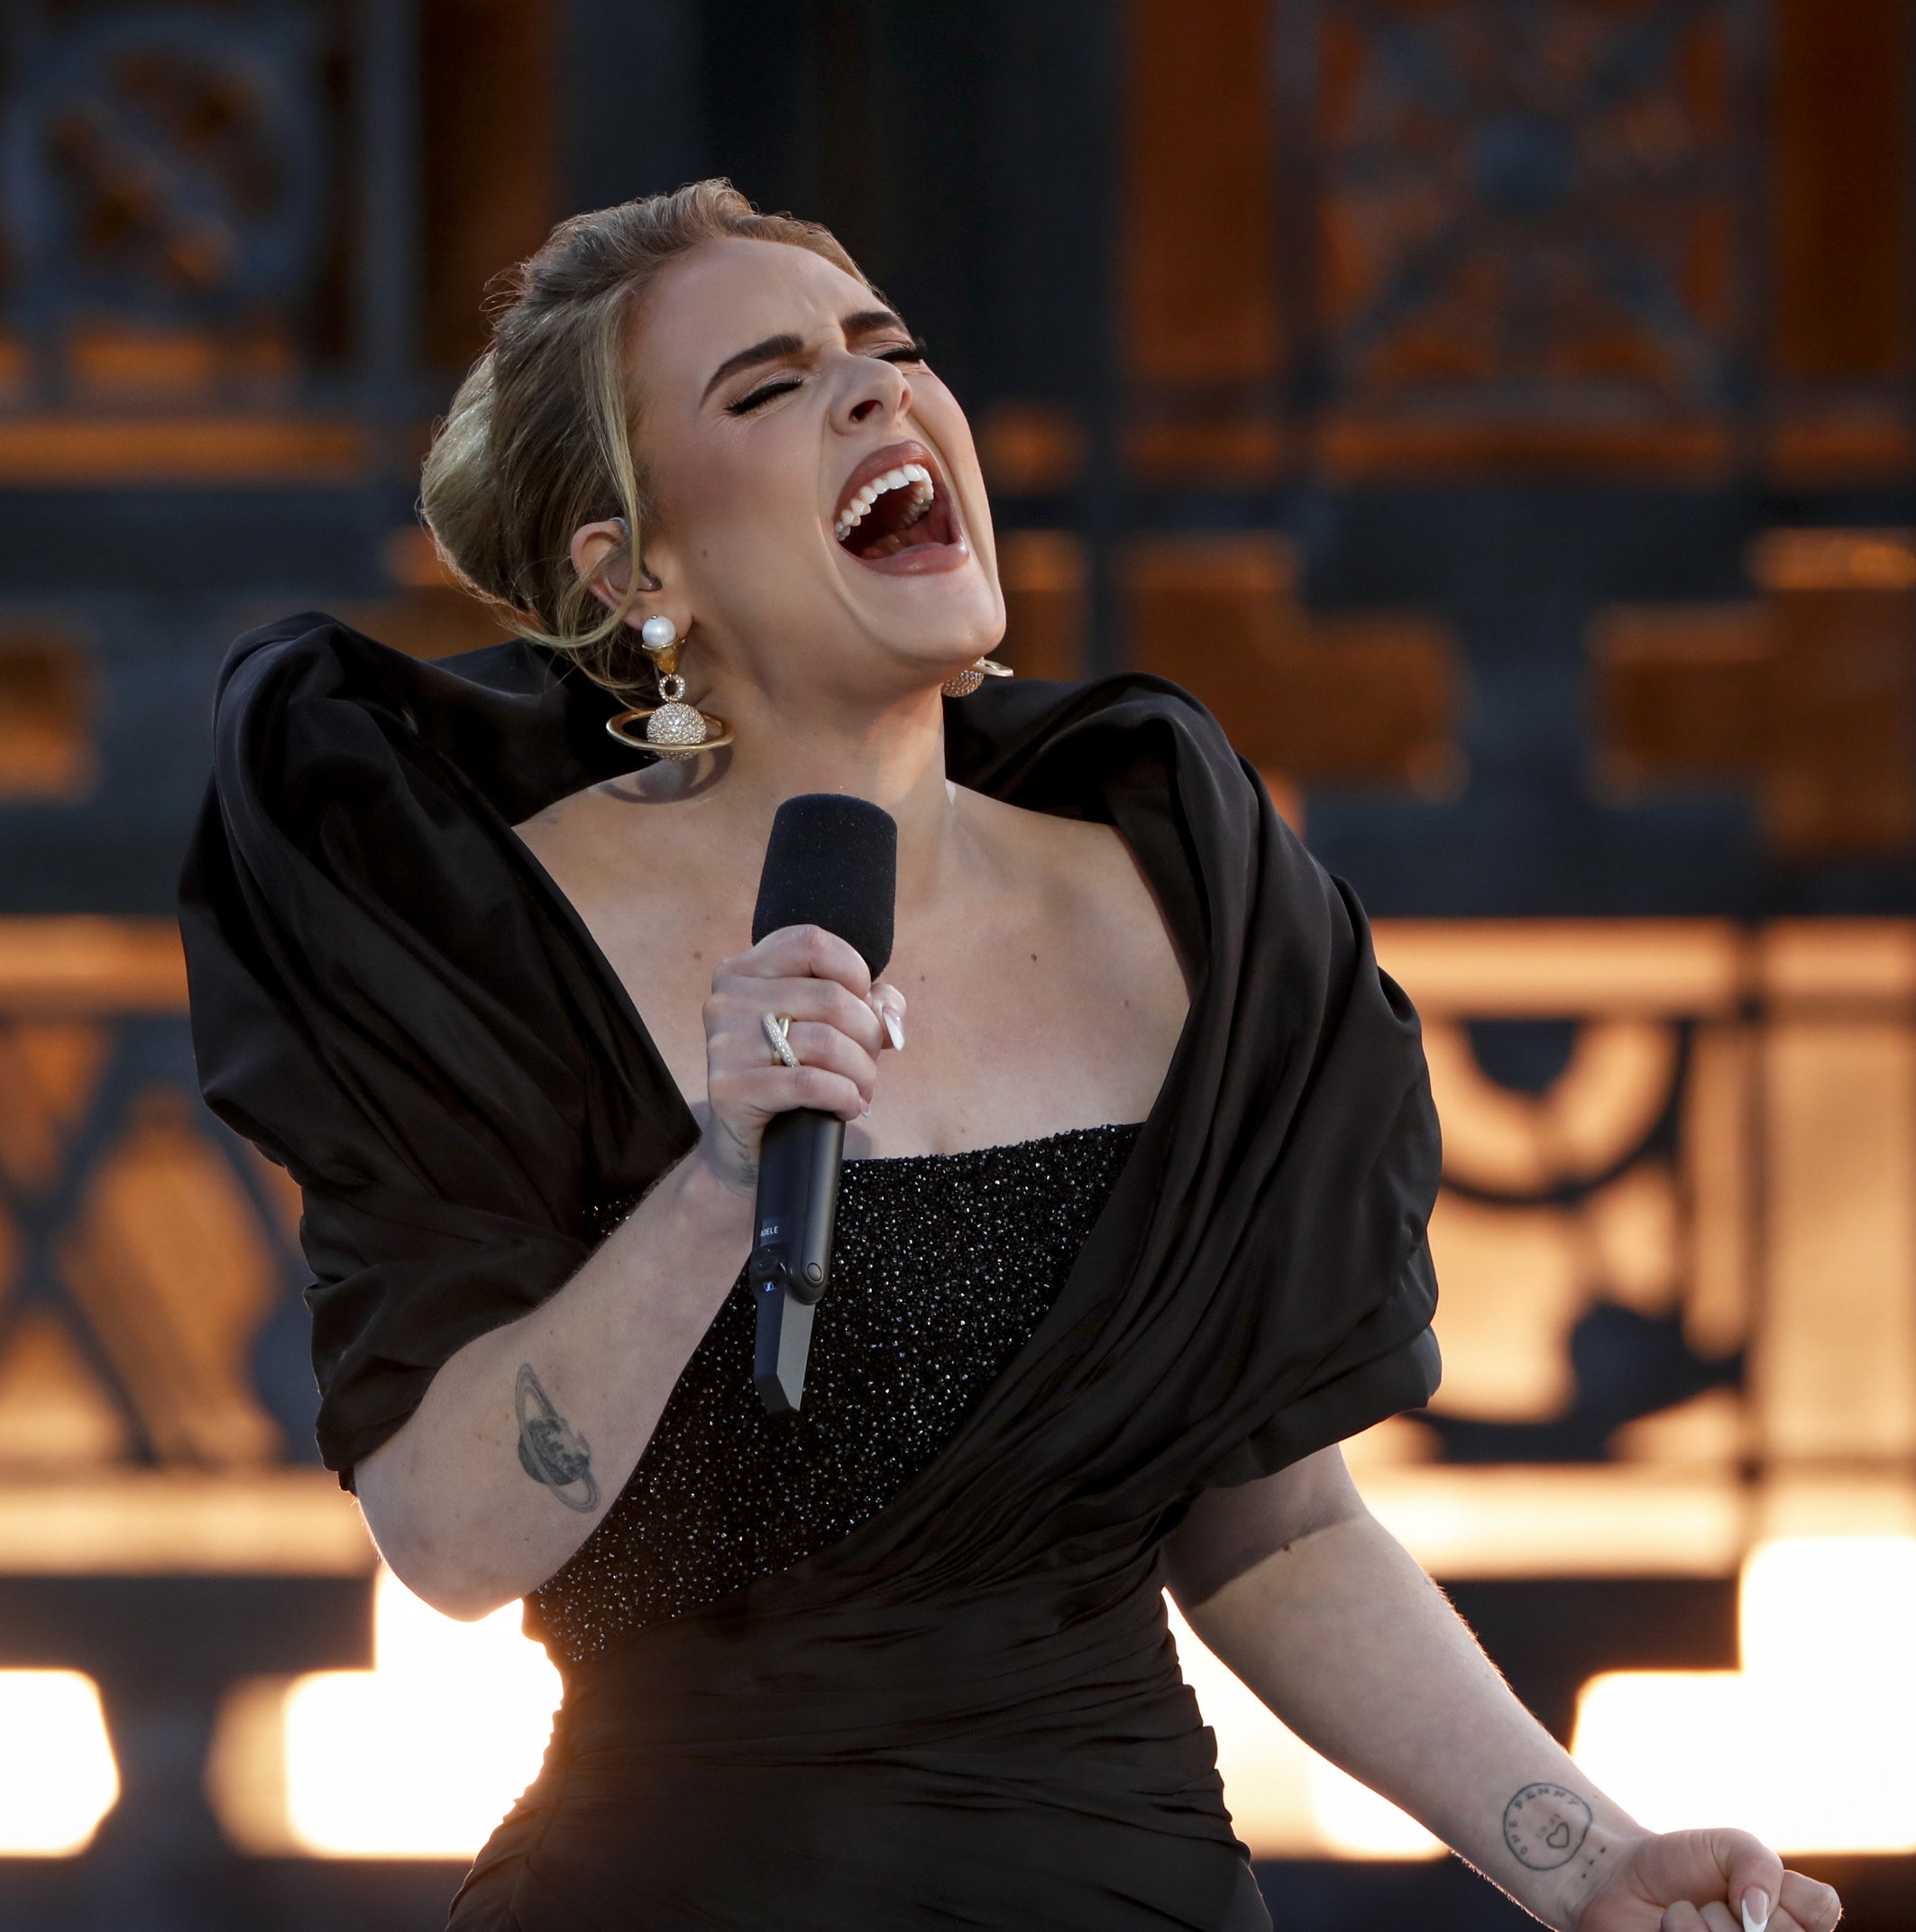 Adele Details Vegas Residency Postponement And Secret Twitter Account